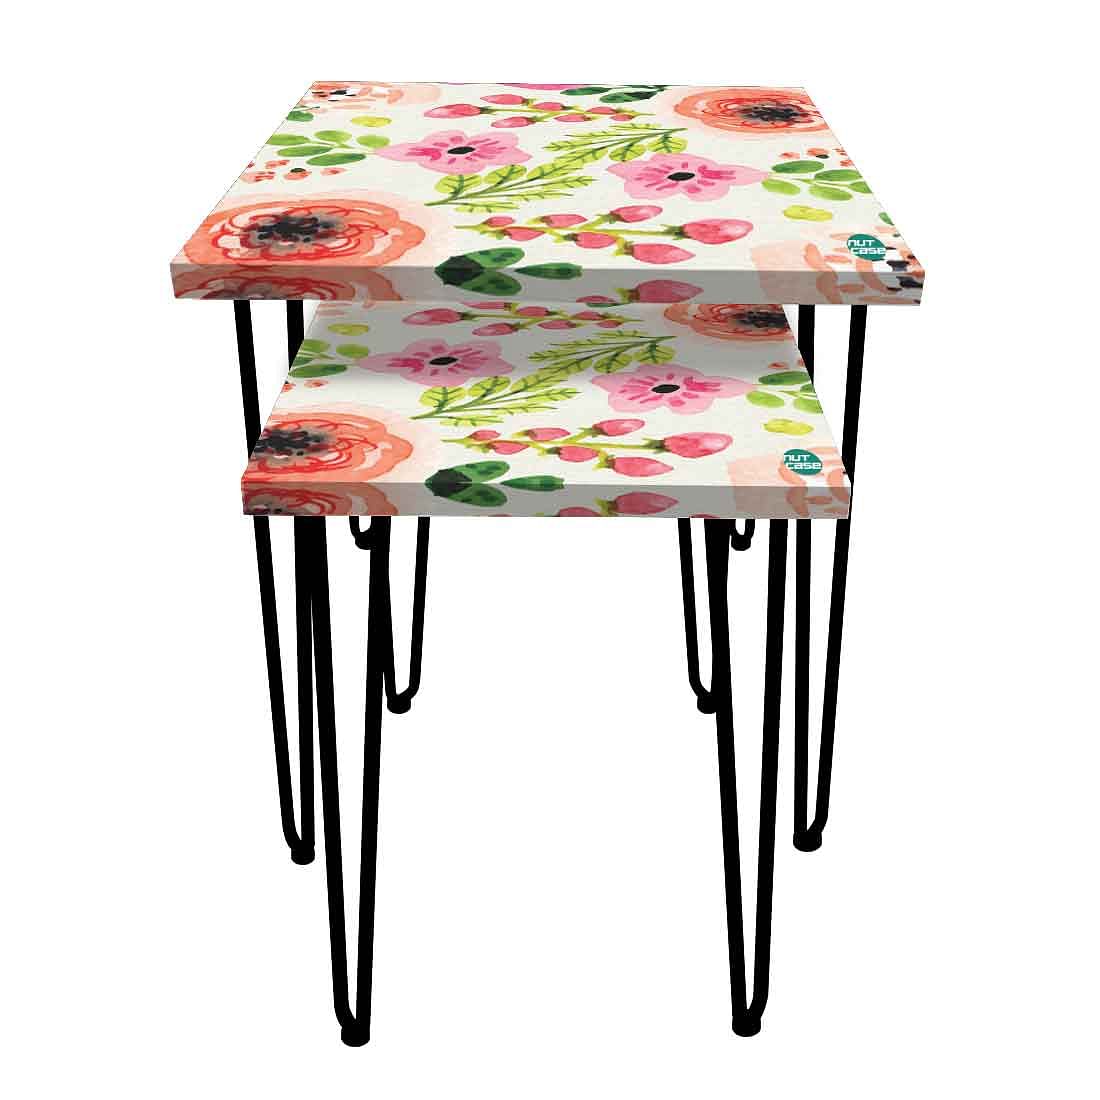 Designer Modern Nest Tables Set of 2 for Living Room - Watercolor Flower Nutcase